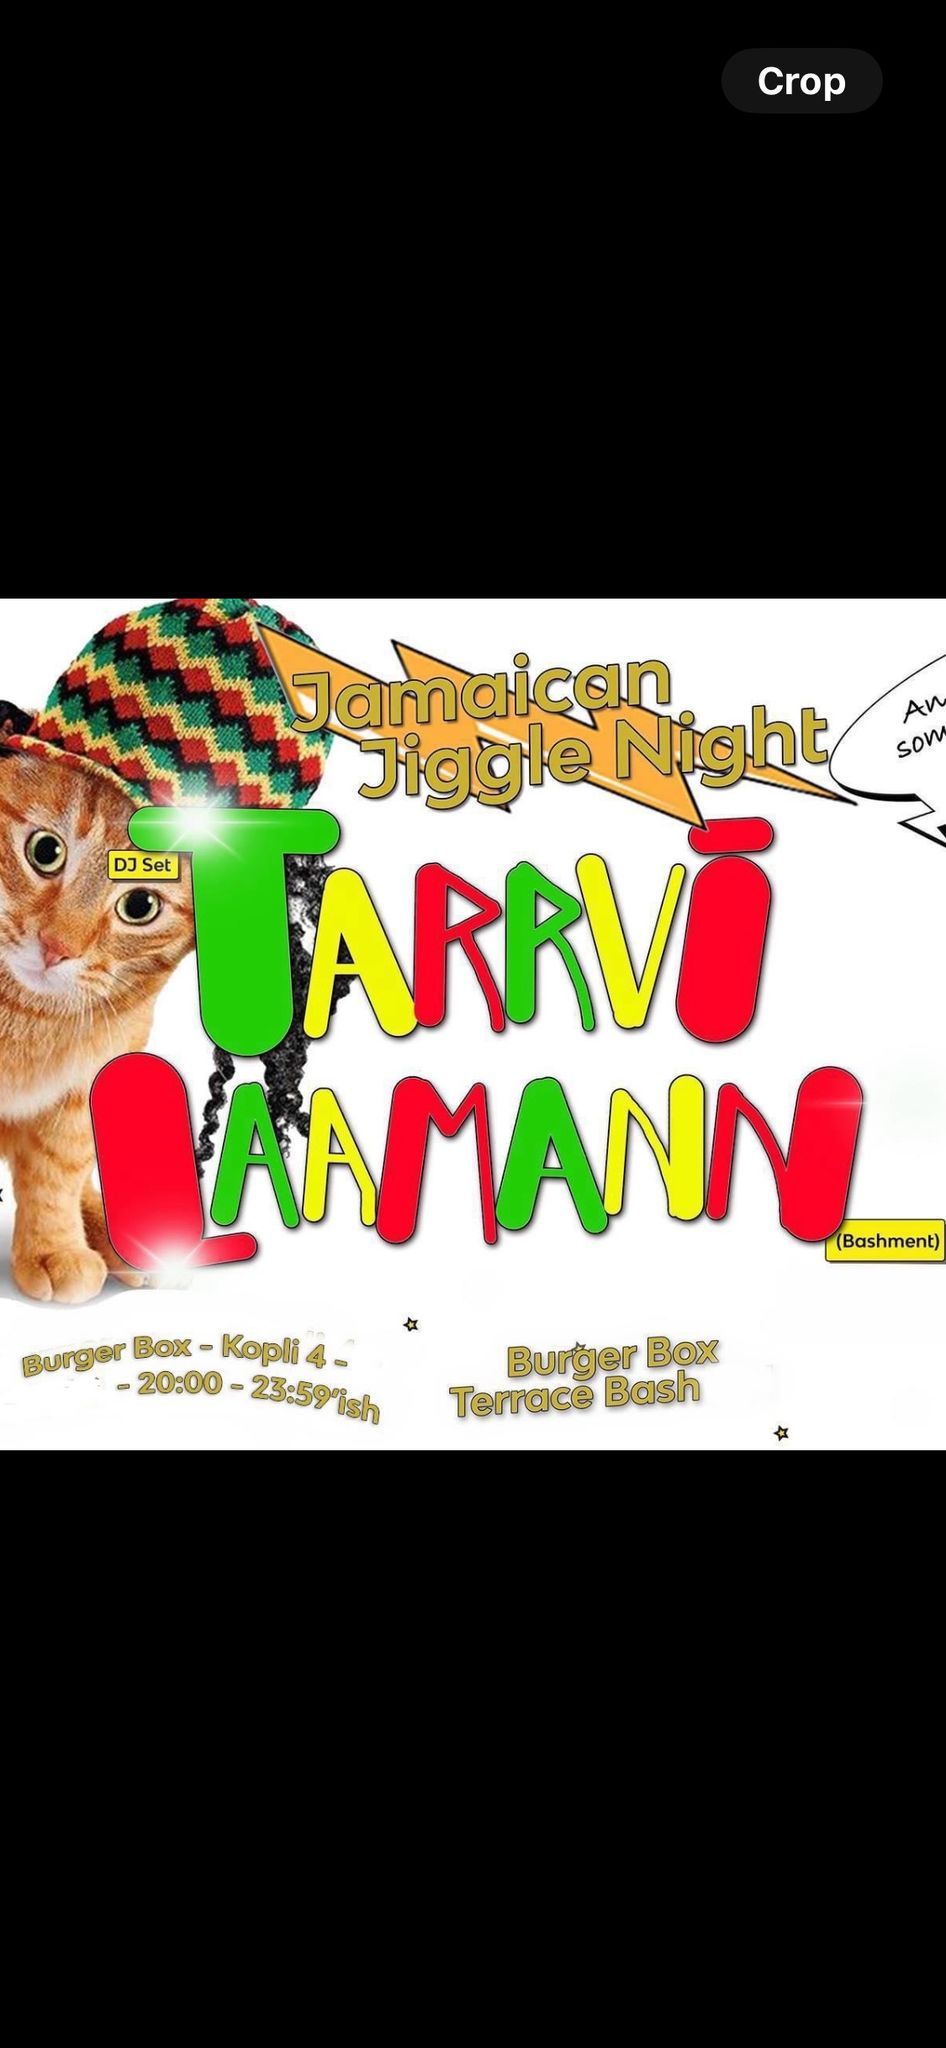 DJ Tarrvi Laamann! Reggae night!